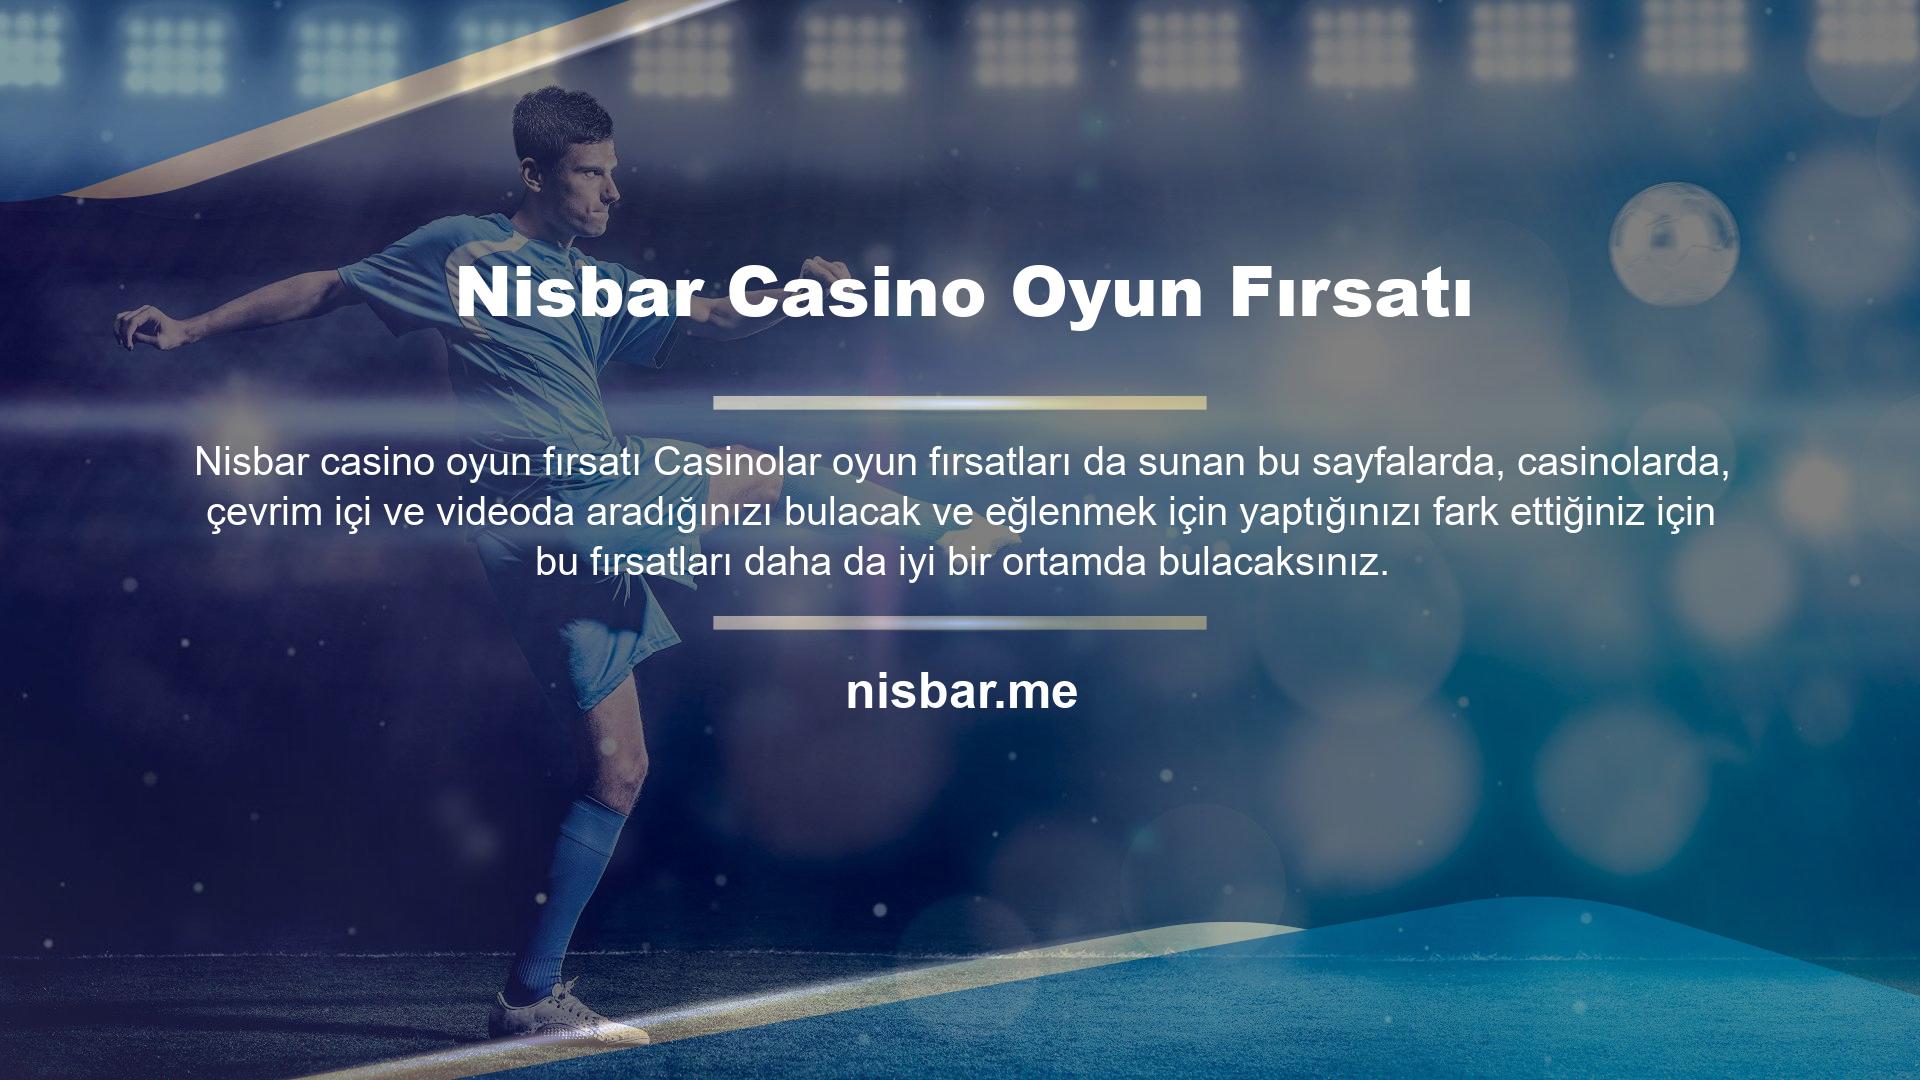 Nisbar Casino Oyun Fırsatı